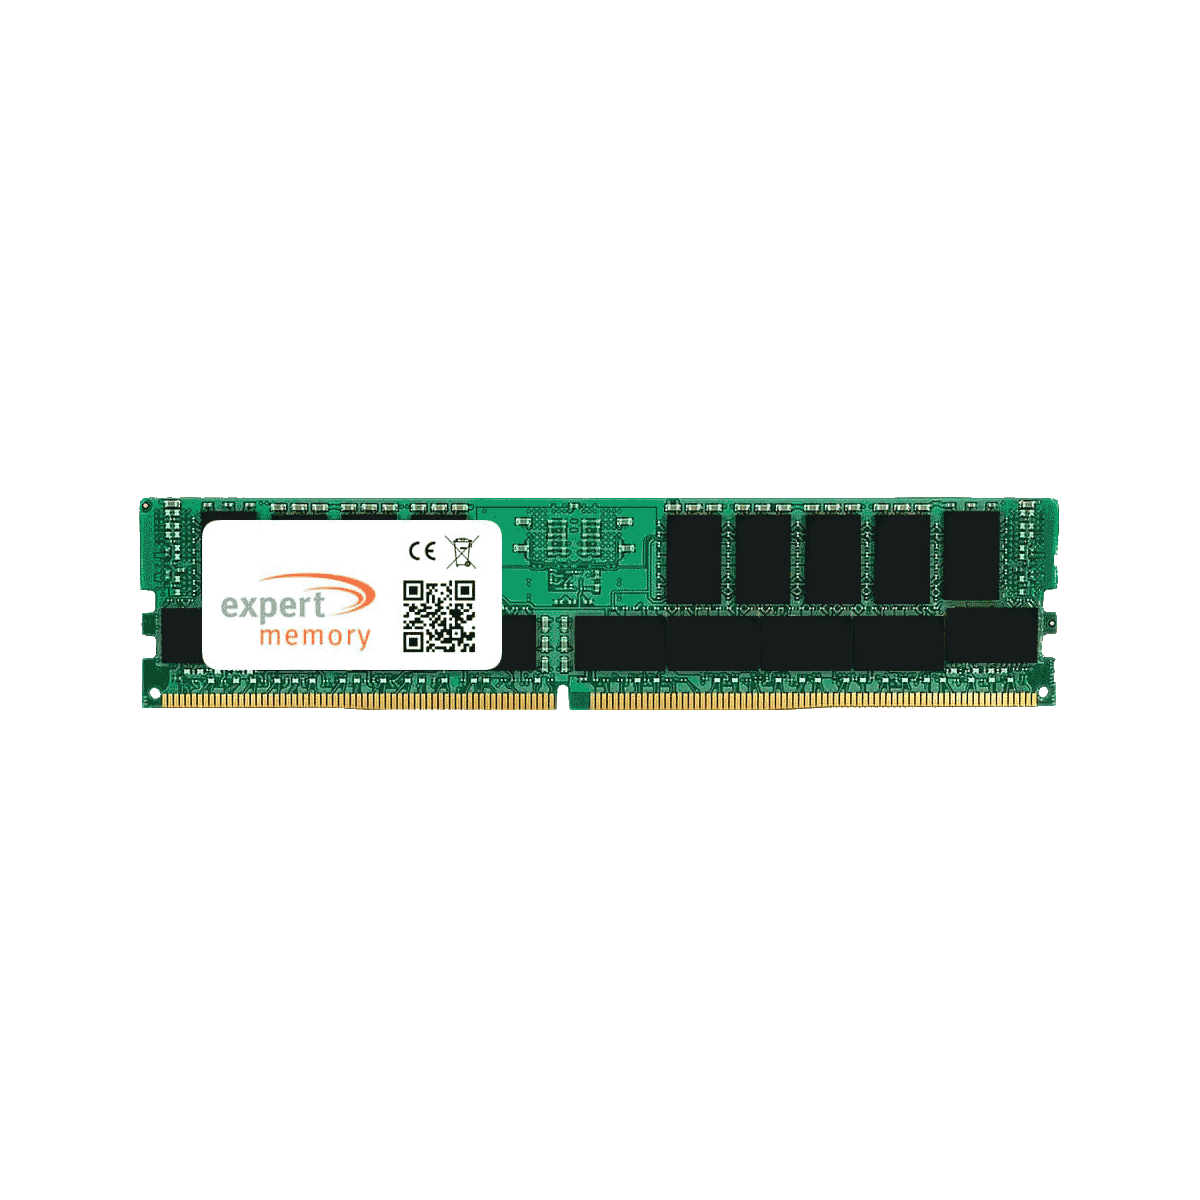 EXPERT MEMORY 32GB RDIMM 2Rx4 HP GB RAM ProLiant DL60 Server Memory Upgrade Gen9 2133 32 DDR4